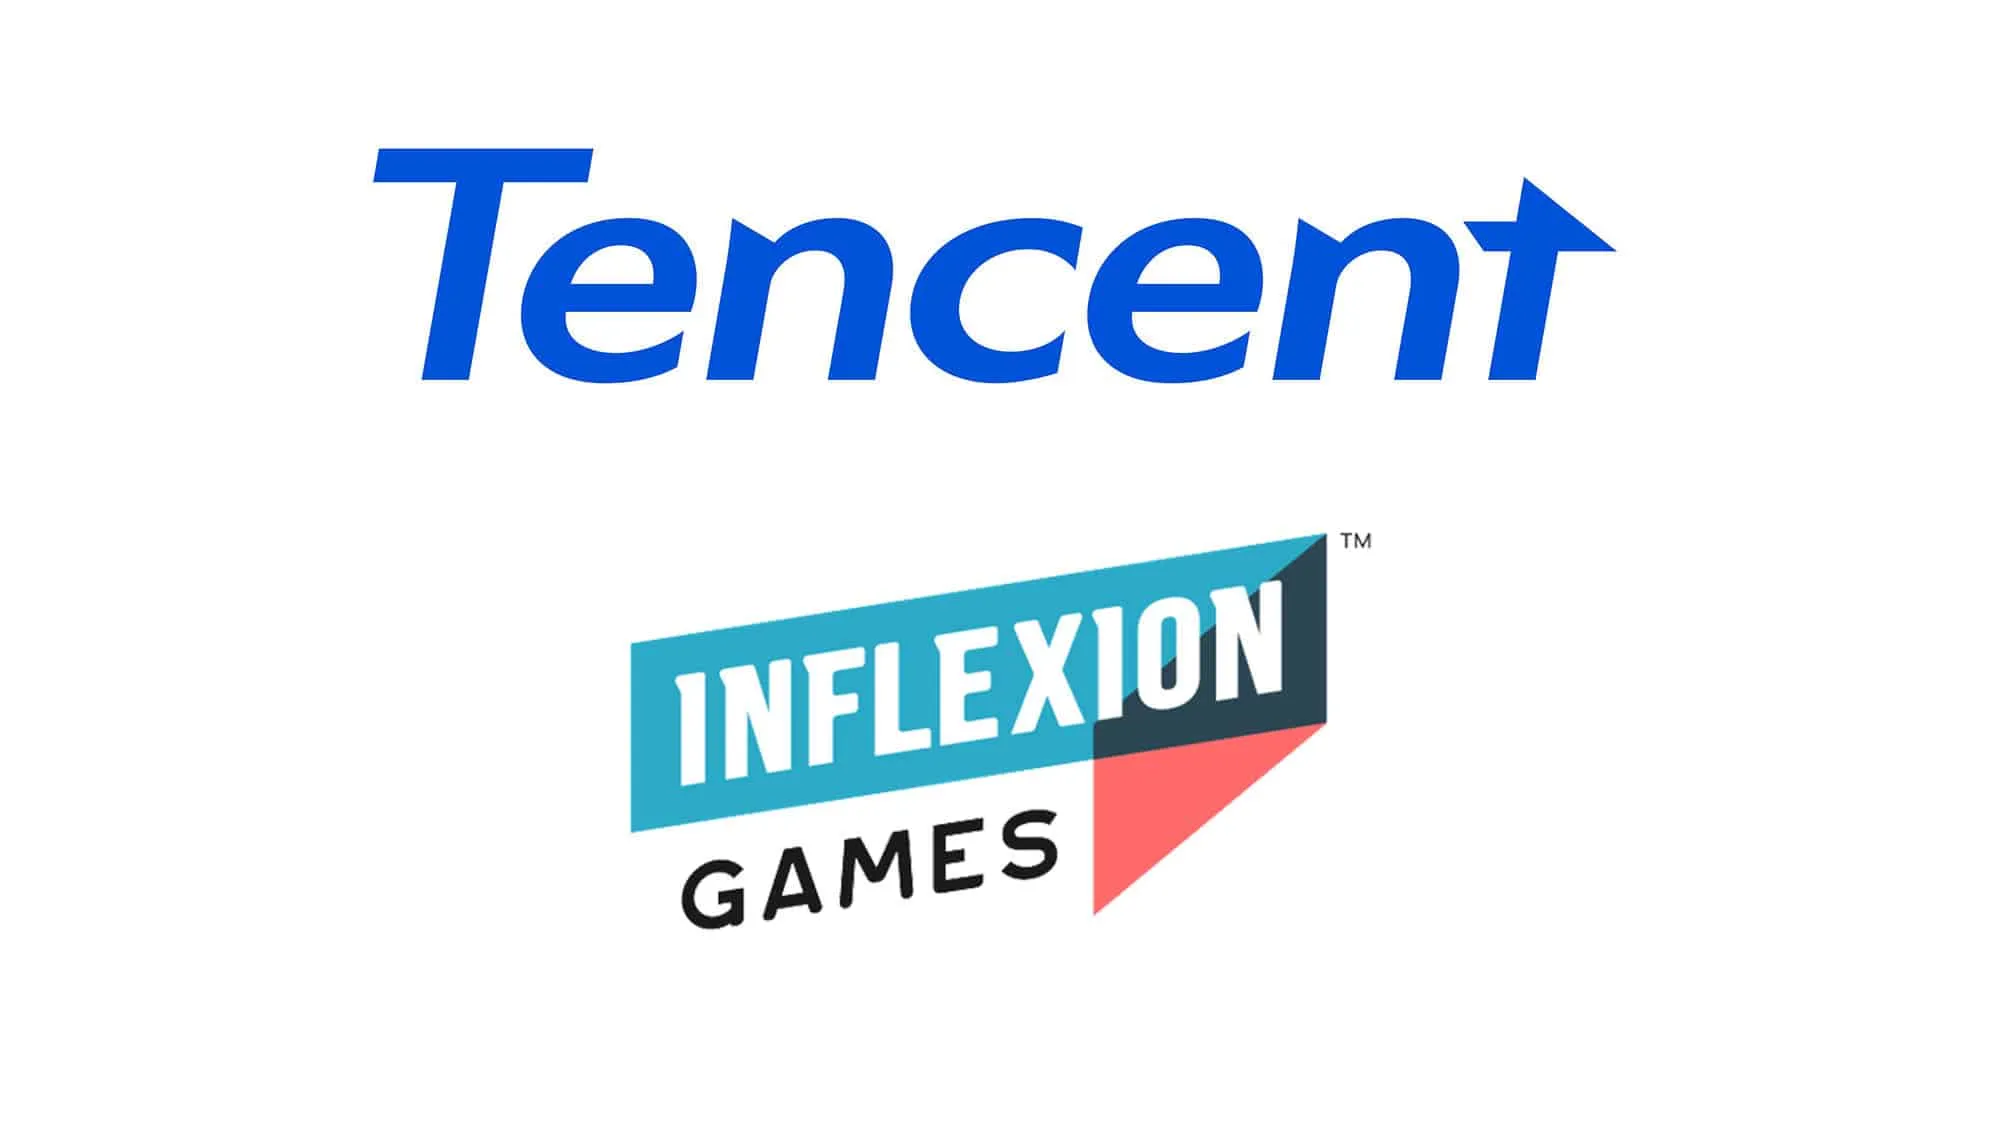 Impropable продает Inflexion Games компании Tencent